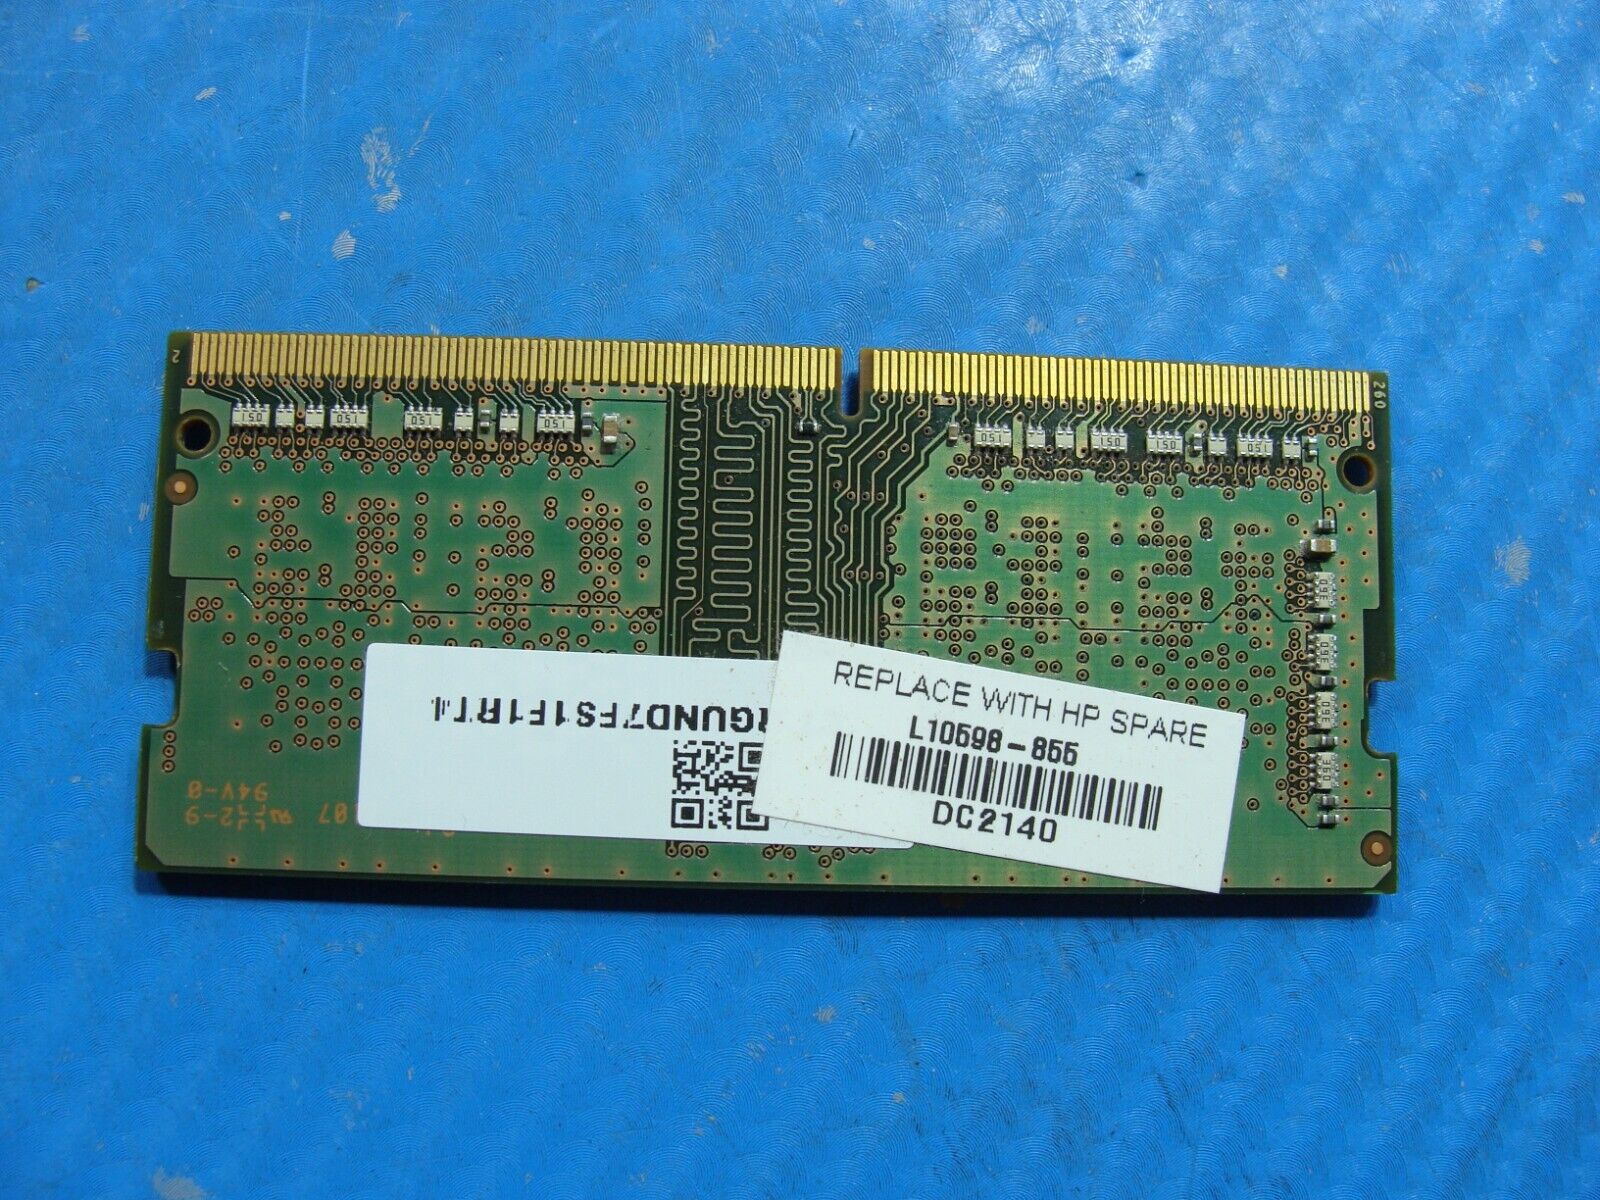 HP 15-dy2051wm Samsung 4GB 1Rx16 PC4-2666V SO-DIMM Memory RAM M471A5244CB0-CTD